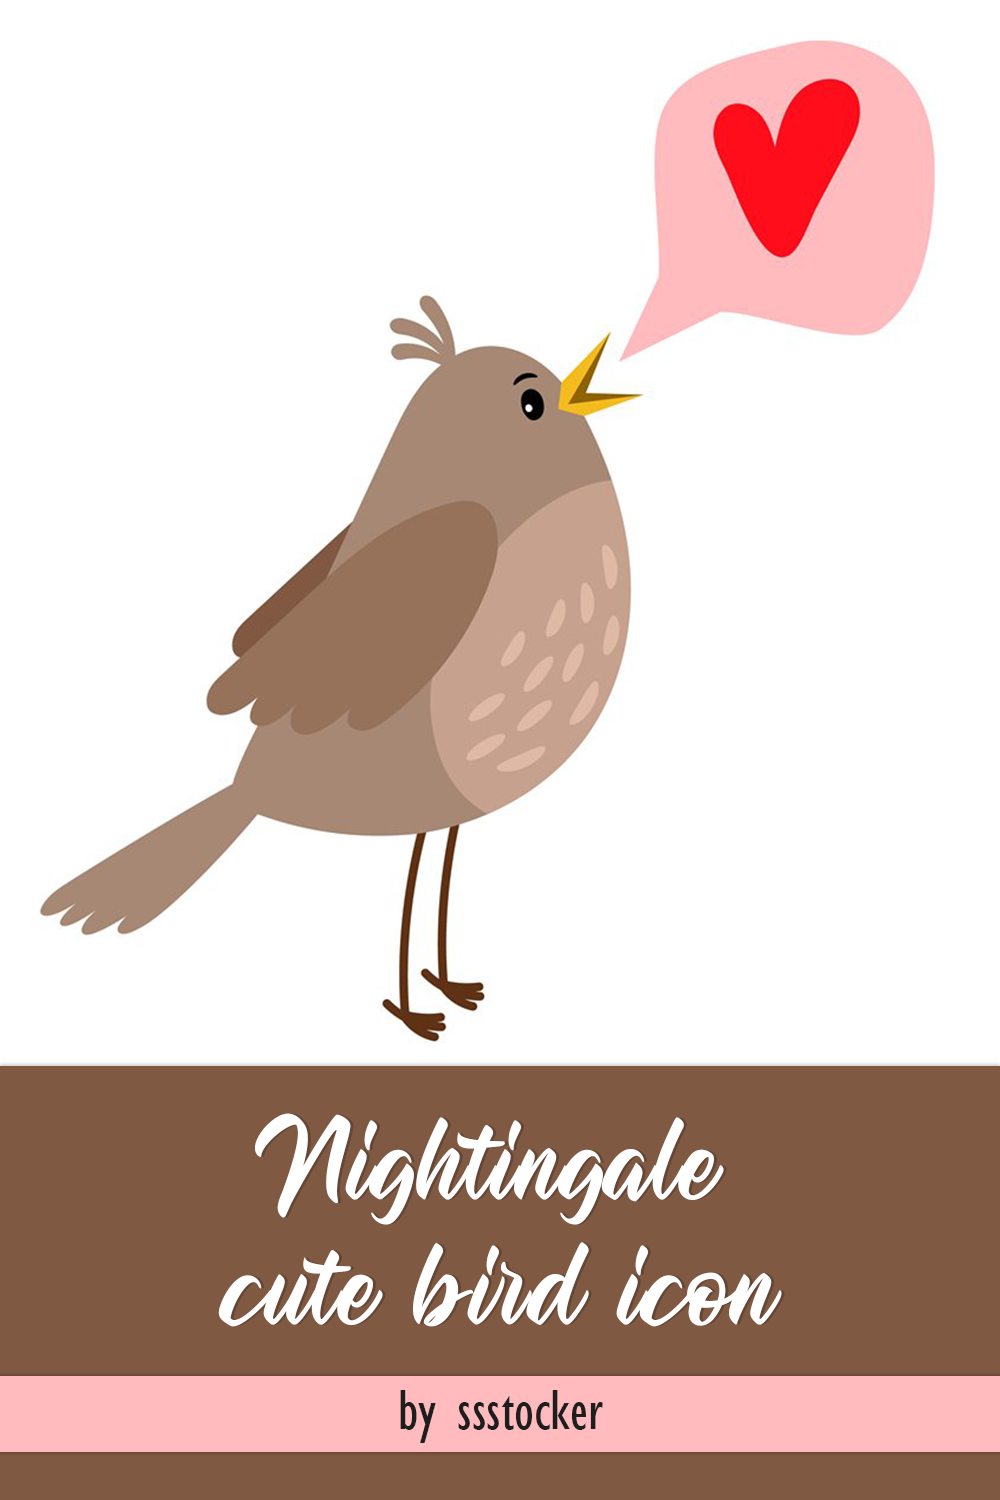 nightingale cute bird icon pinterest